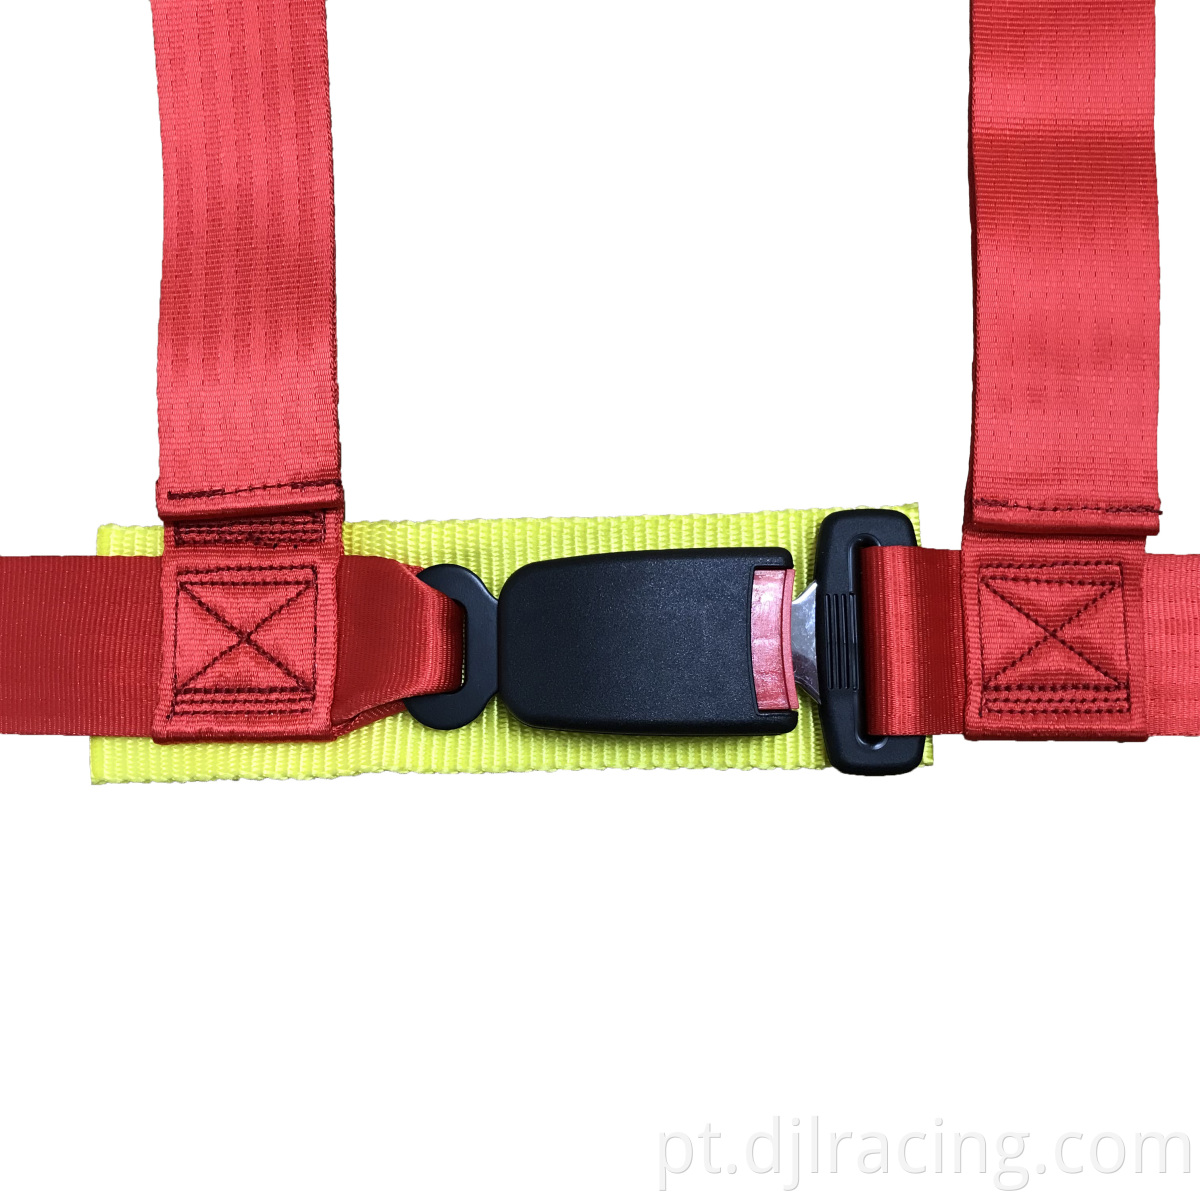 2020 Hot Selling 4 Point Safety Belt Racing Harness para cinto de segurança esportivo